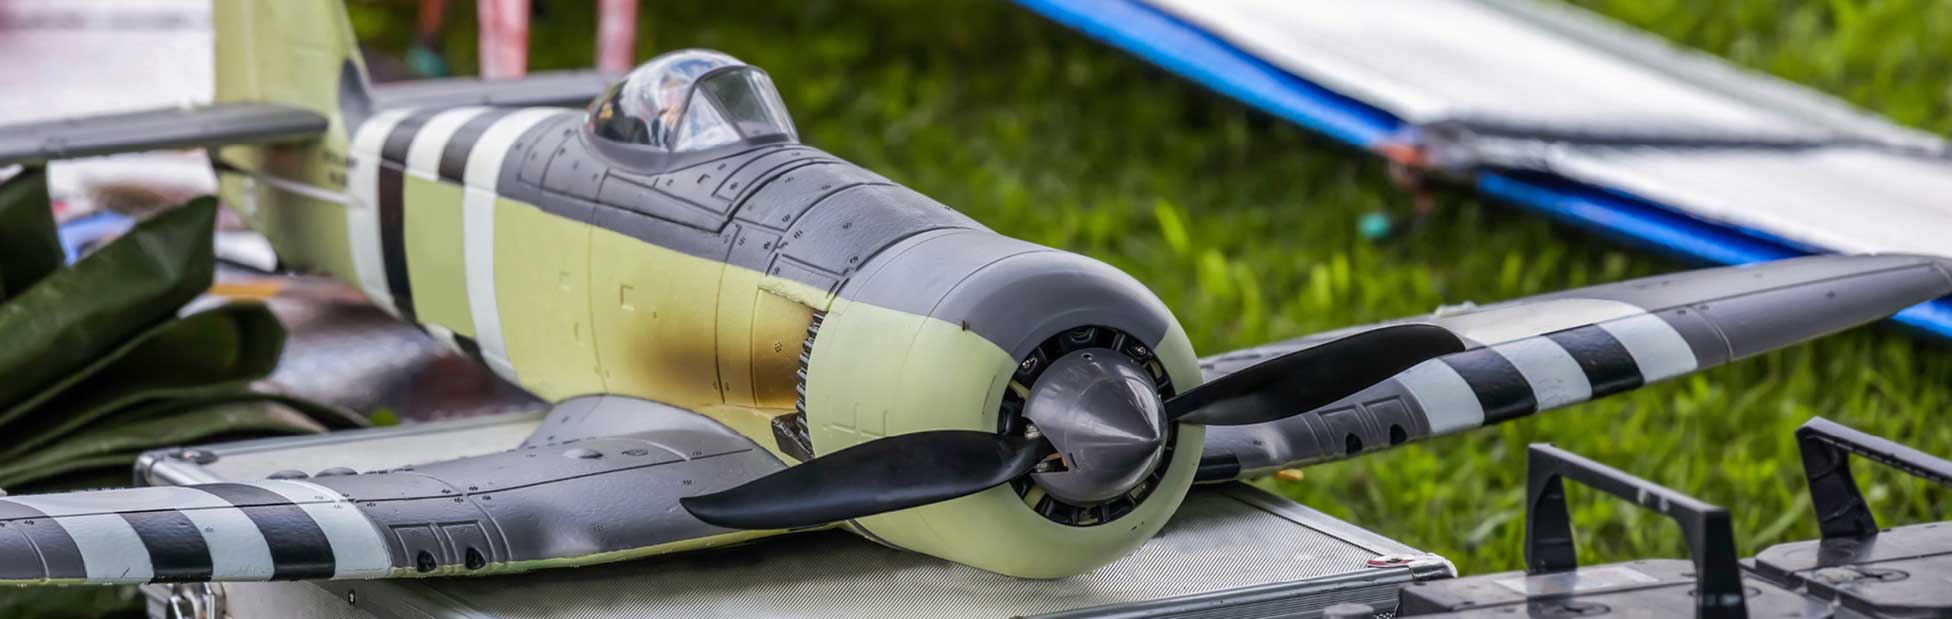 A model aeroplane sitting on the grass